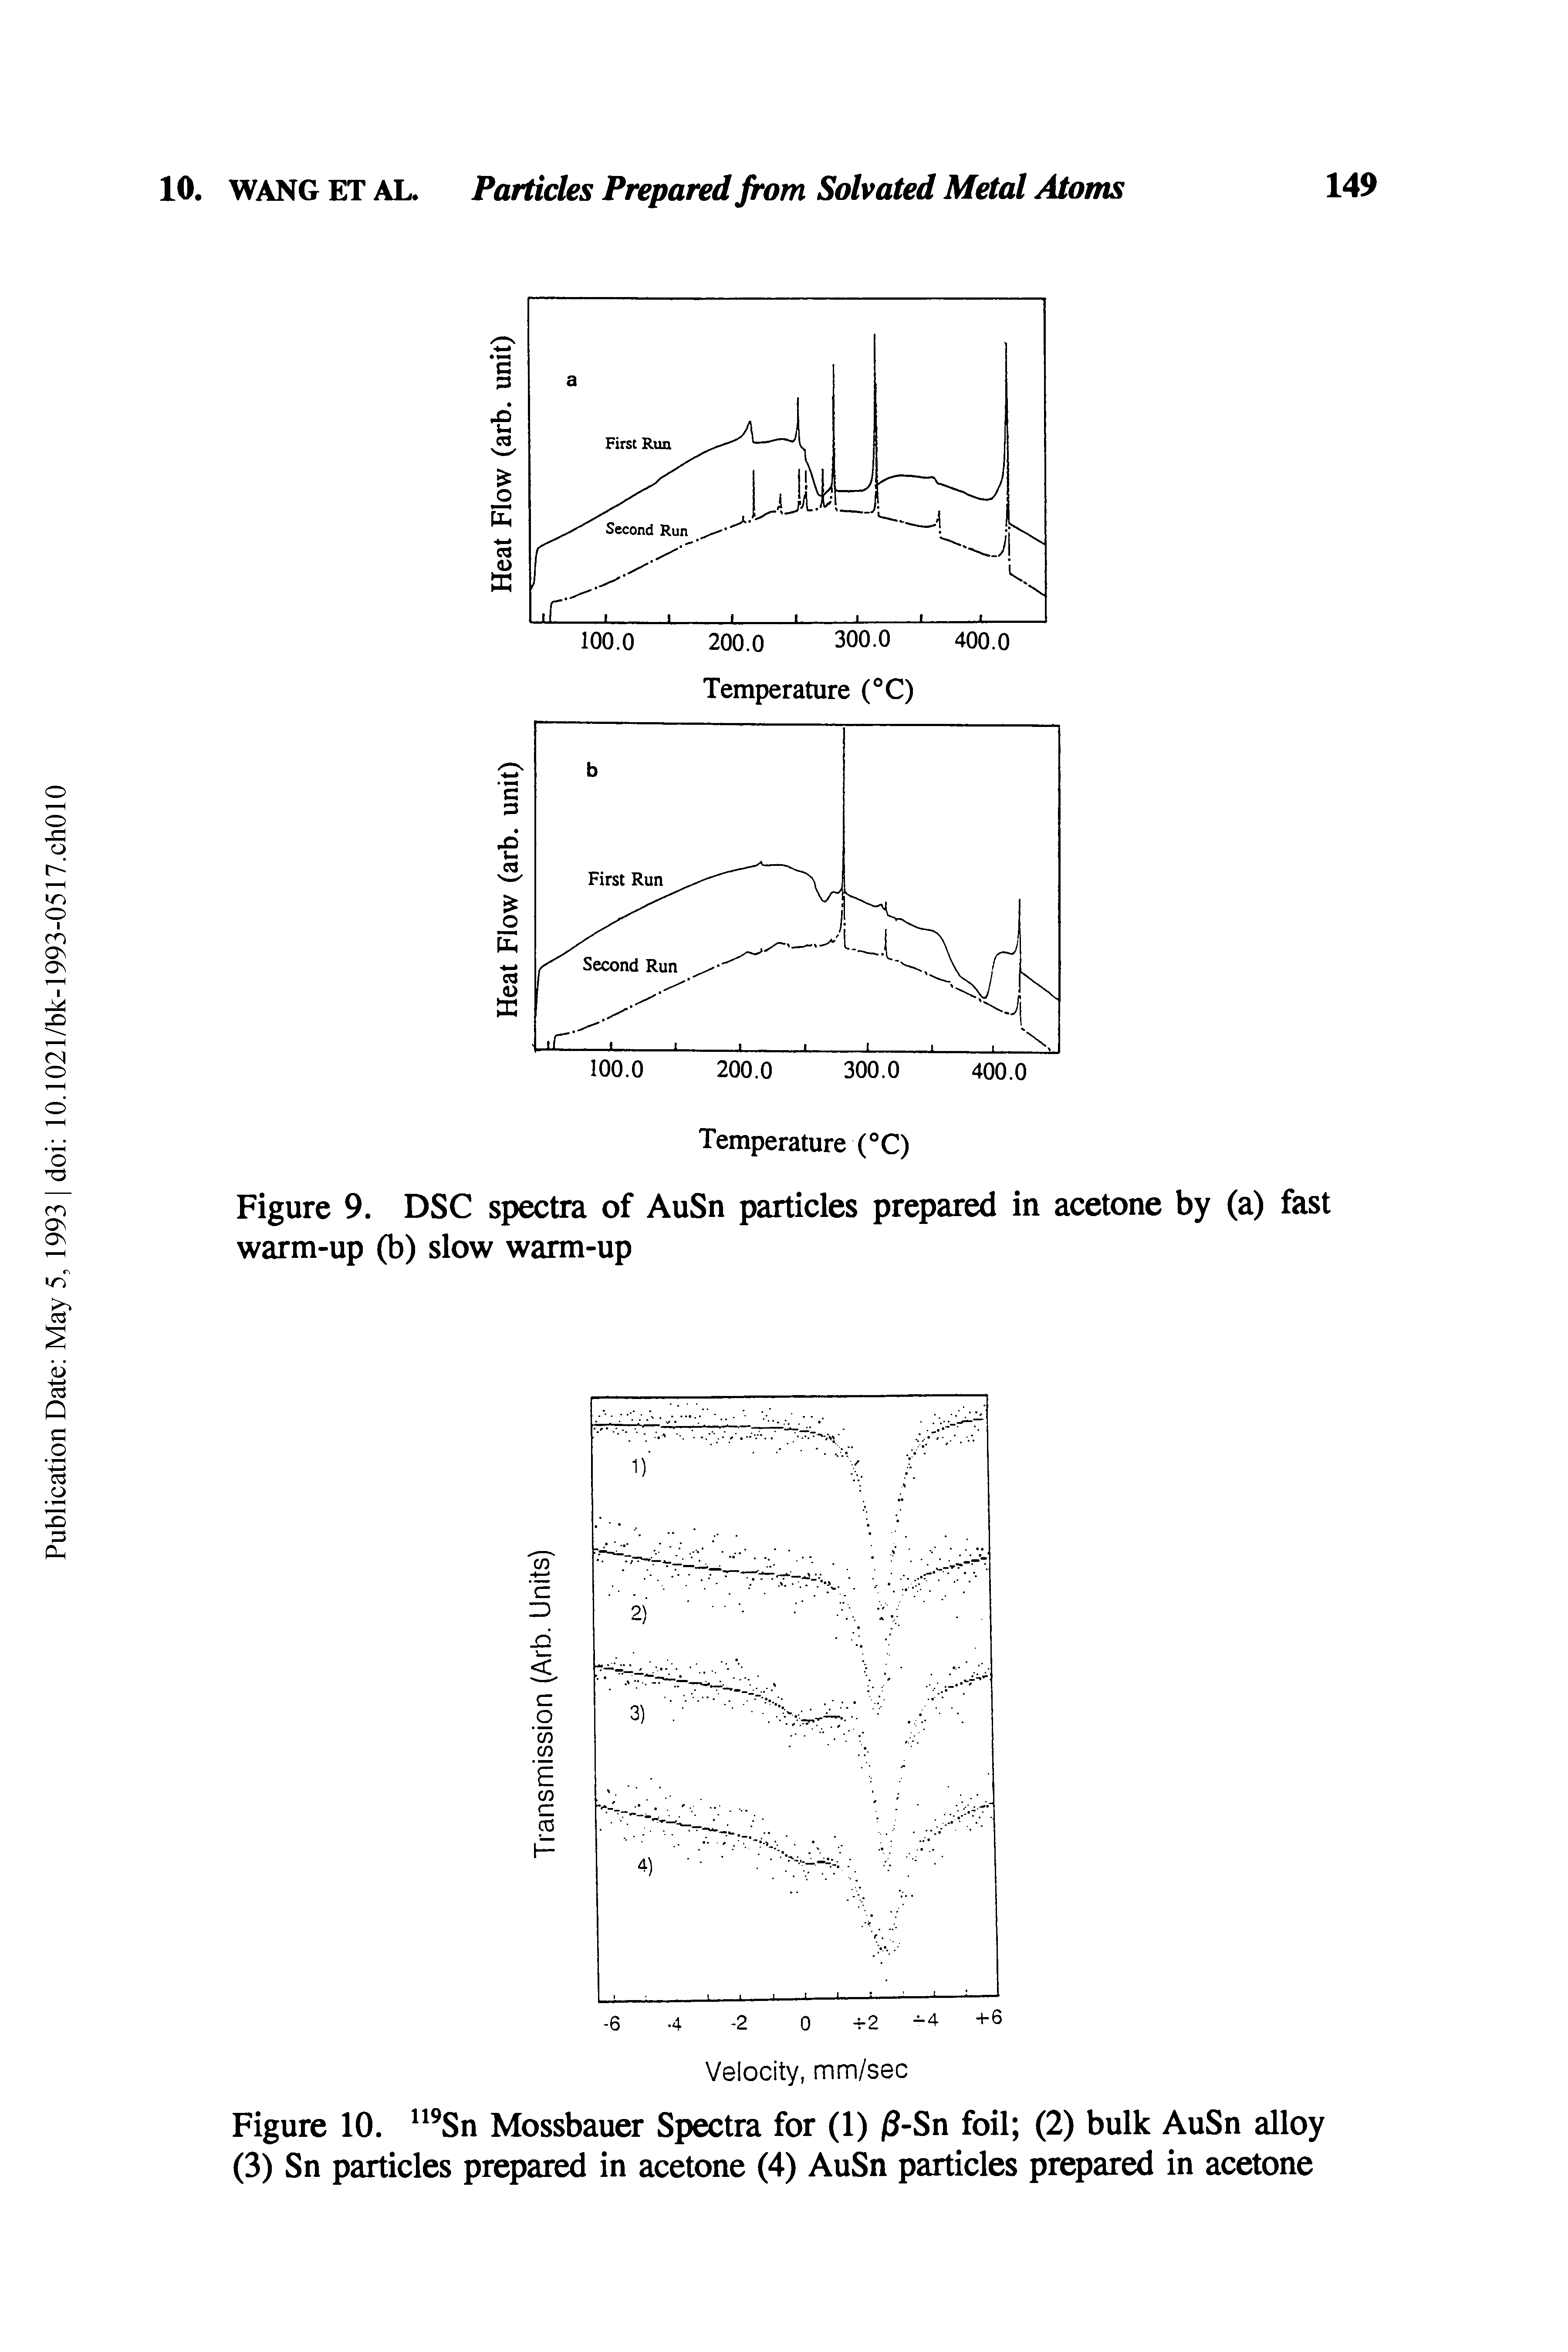 Figure 10. 119Sn Mossbauer Spectra for (1) j3-Sn foil (2) bulk AuSn alloy (3) Sn particles prepared in acetone (4) AuSn particles prepared in acetone...